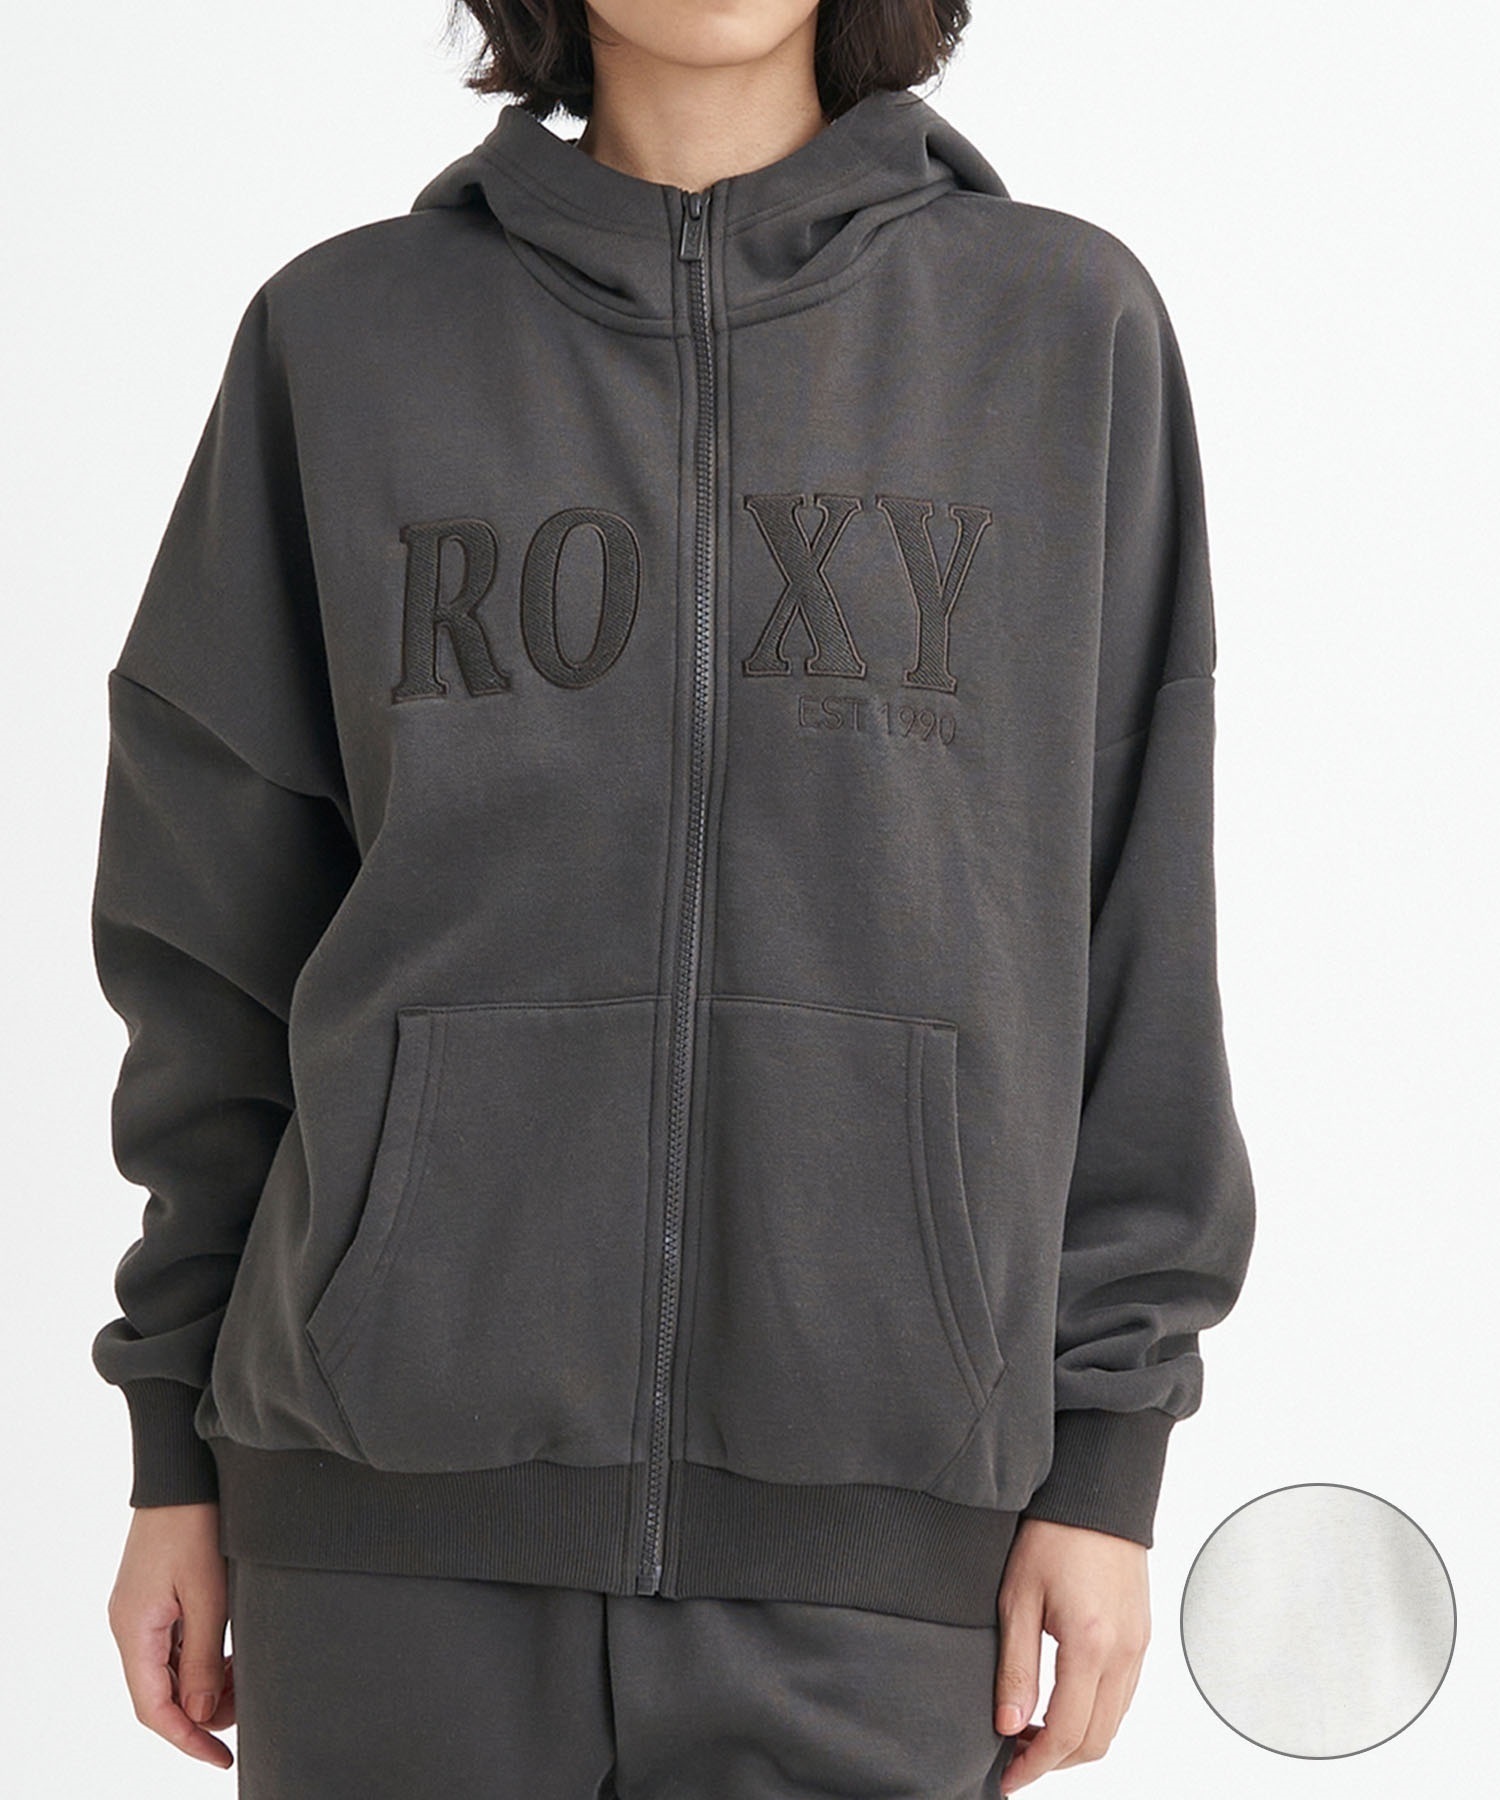 ROXY/ロキシー ジビー ジップアップパーカーレディース  裏起毛 RZP234022(BBK-S)